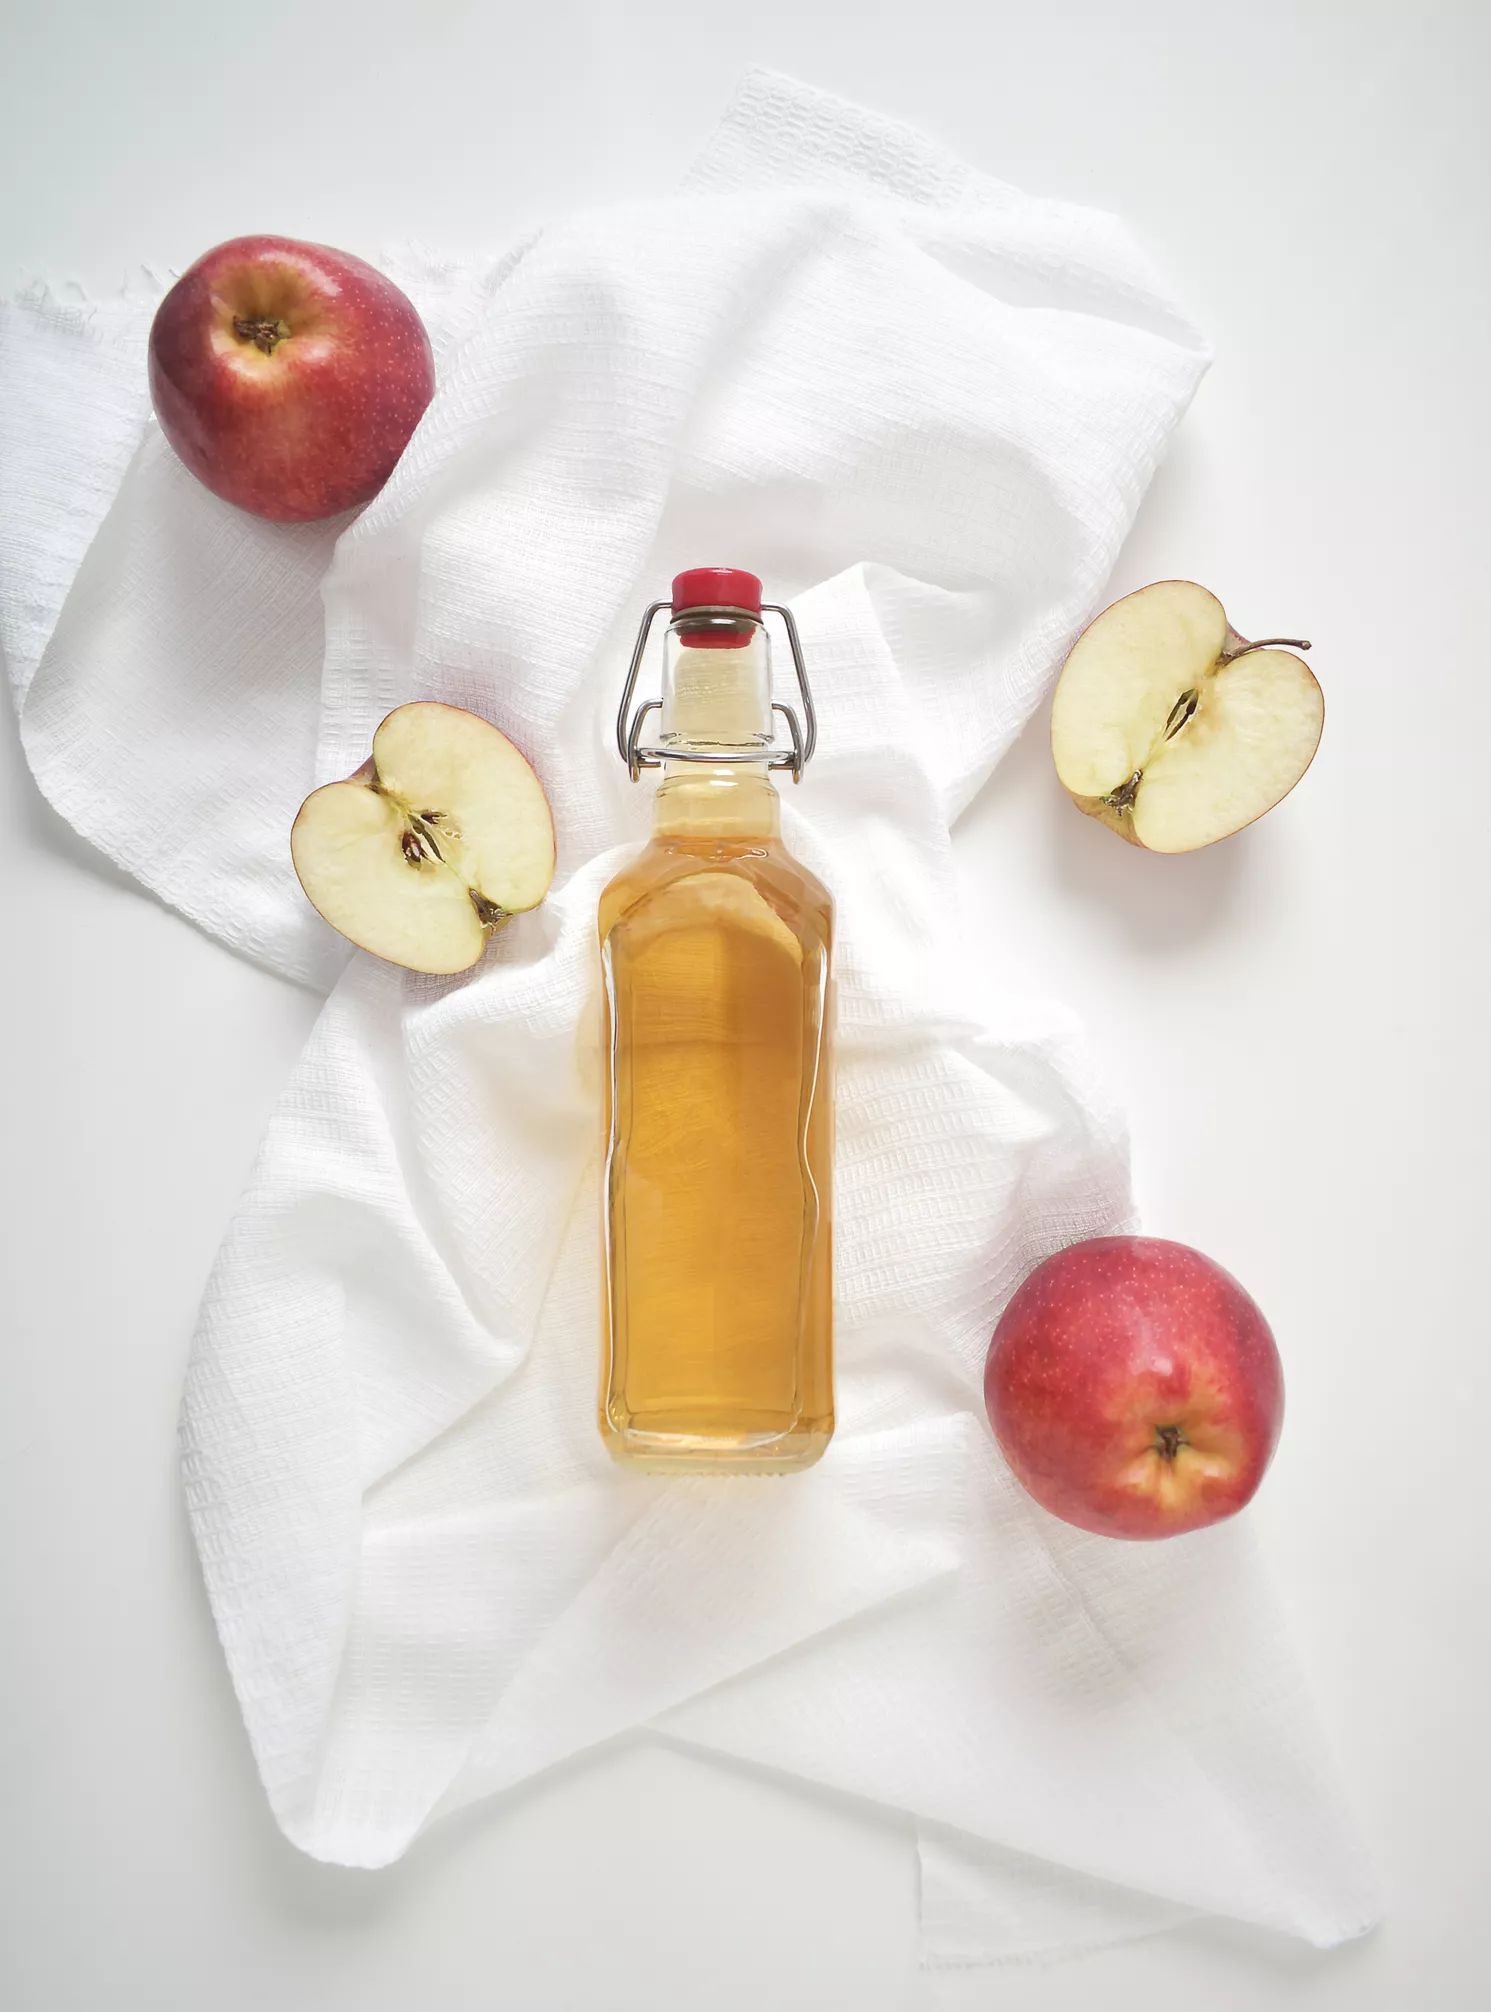 Apple cider vinegar or fermented fruit drink and organic apples on white